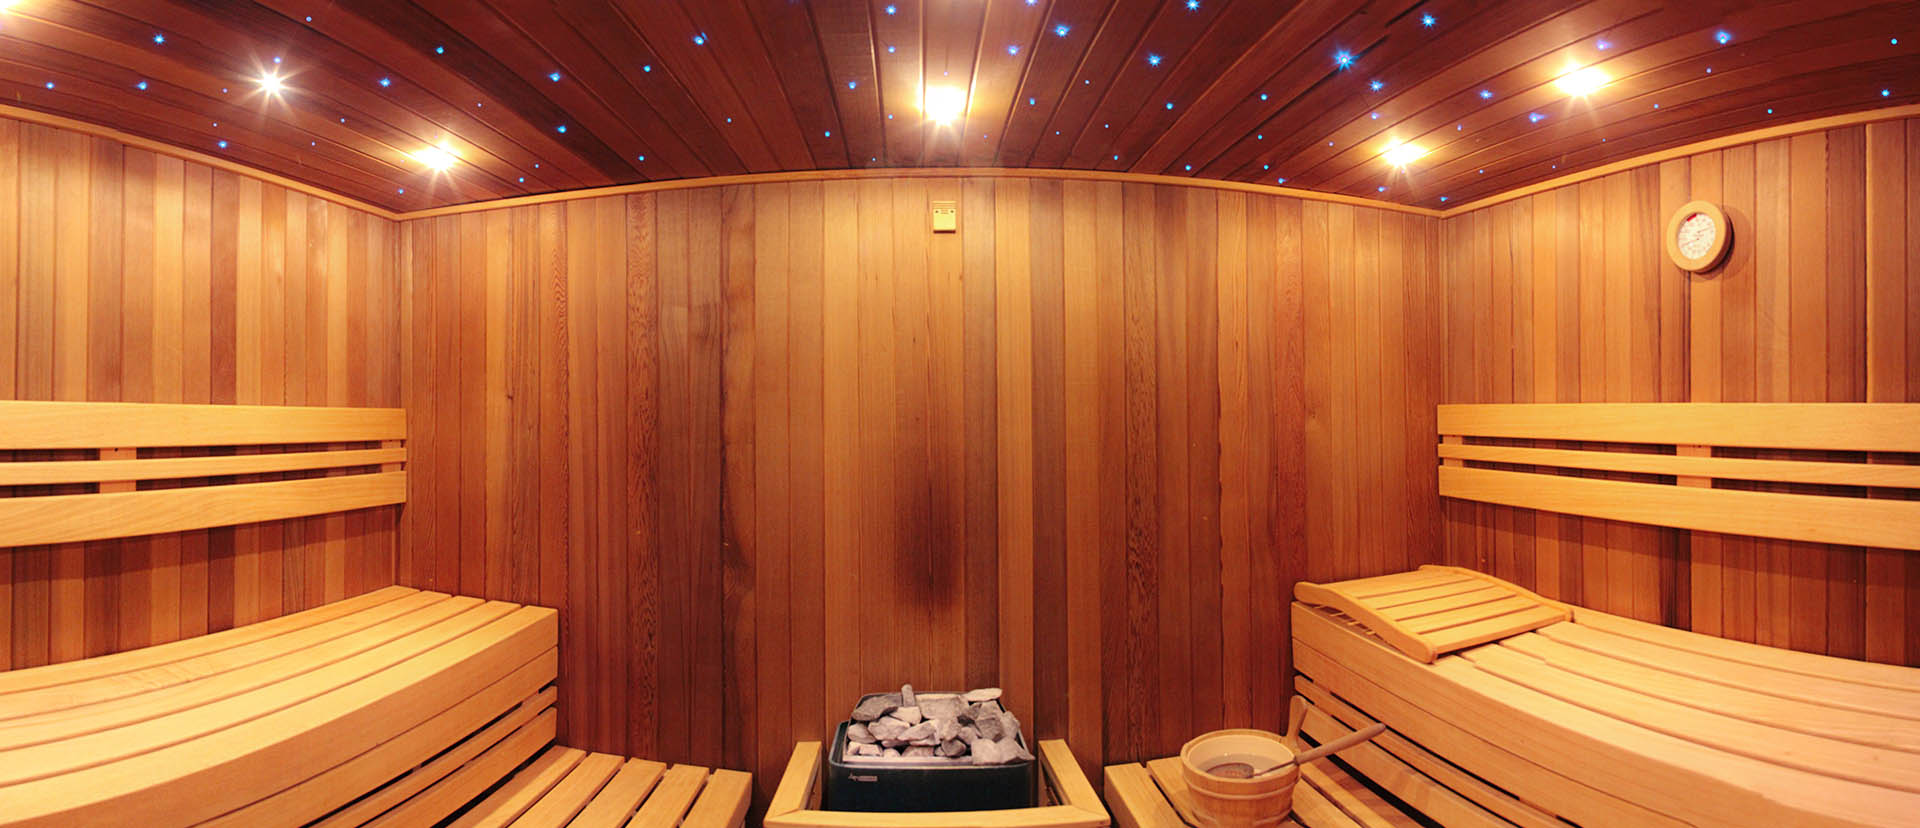 Brzece Junior sauna